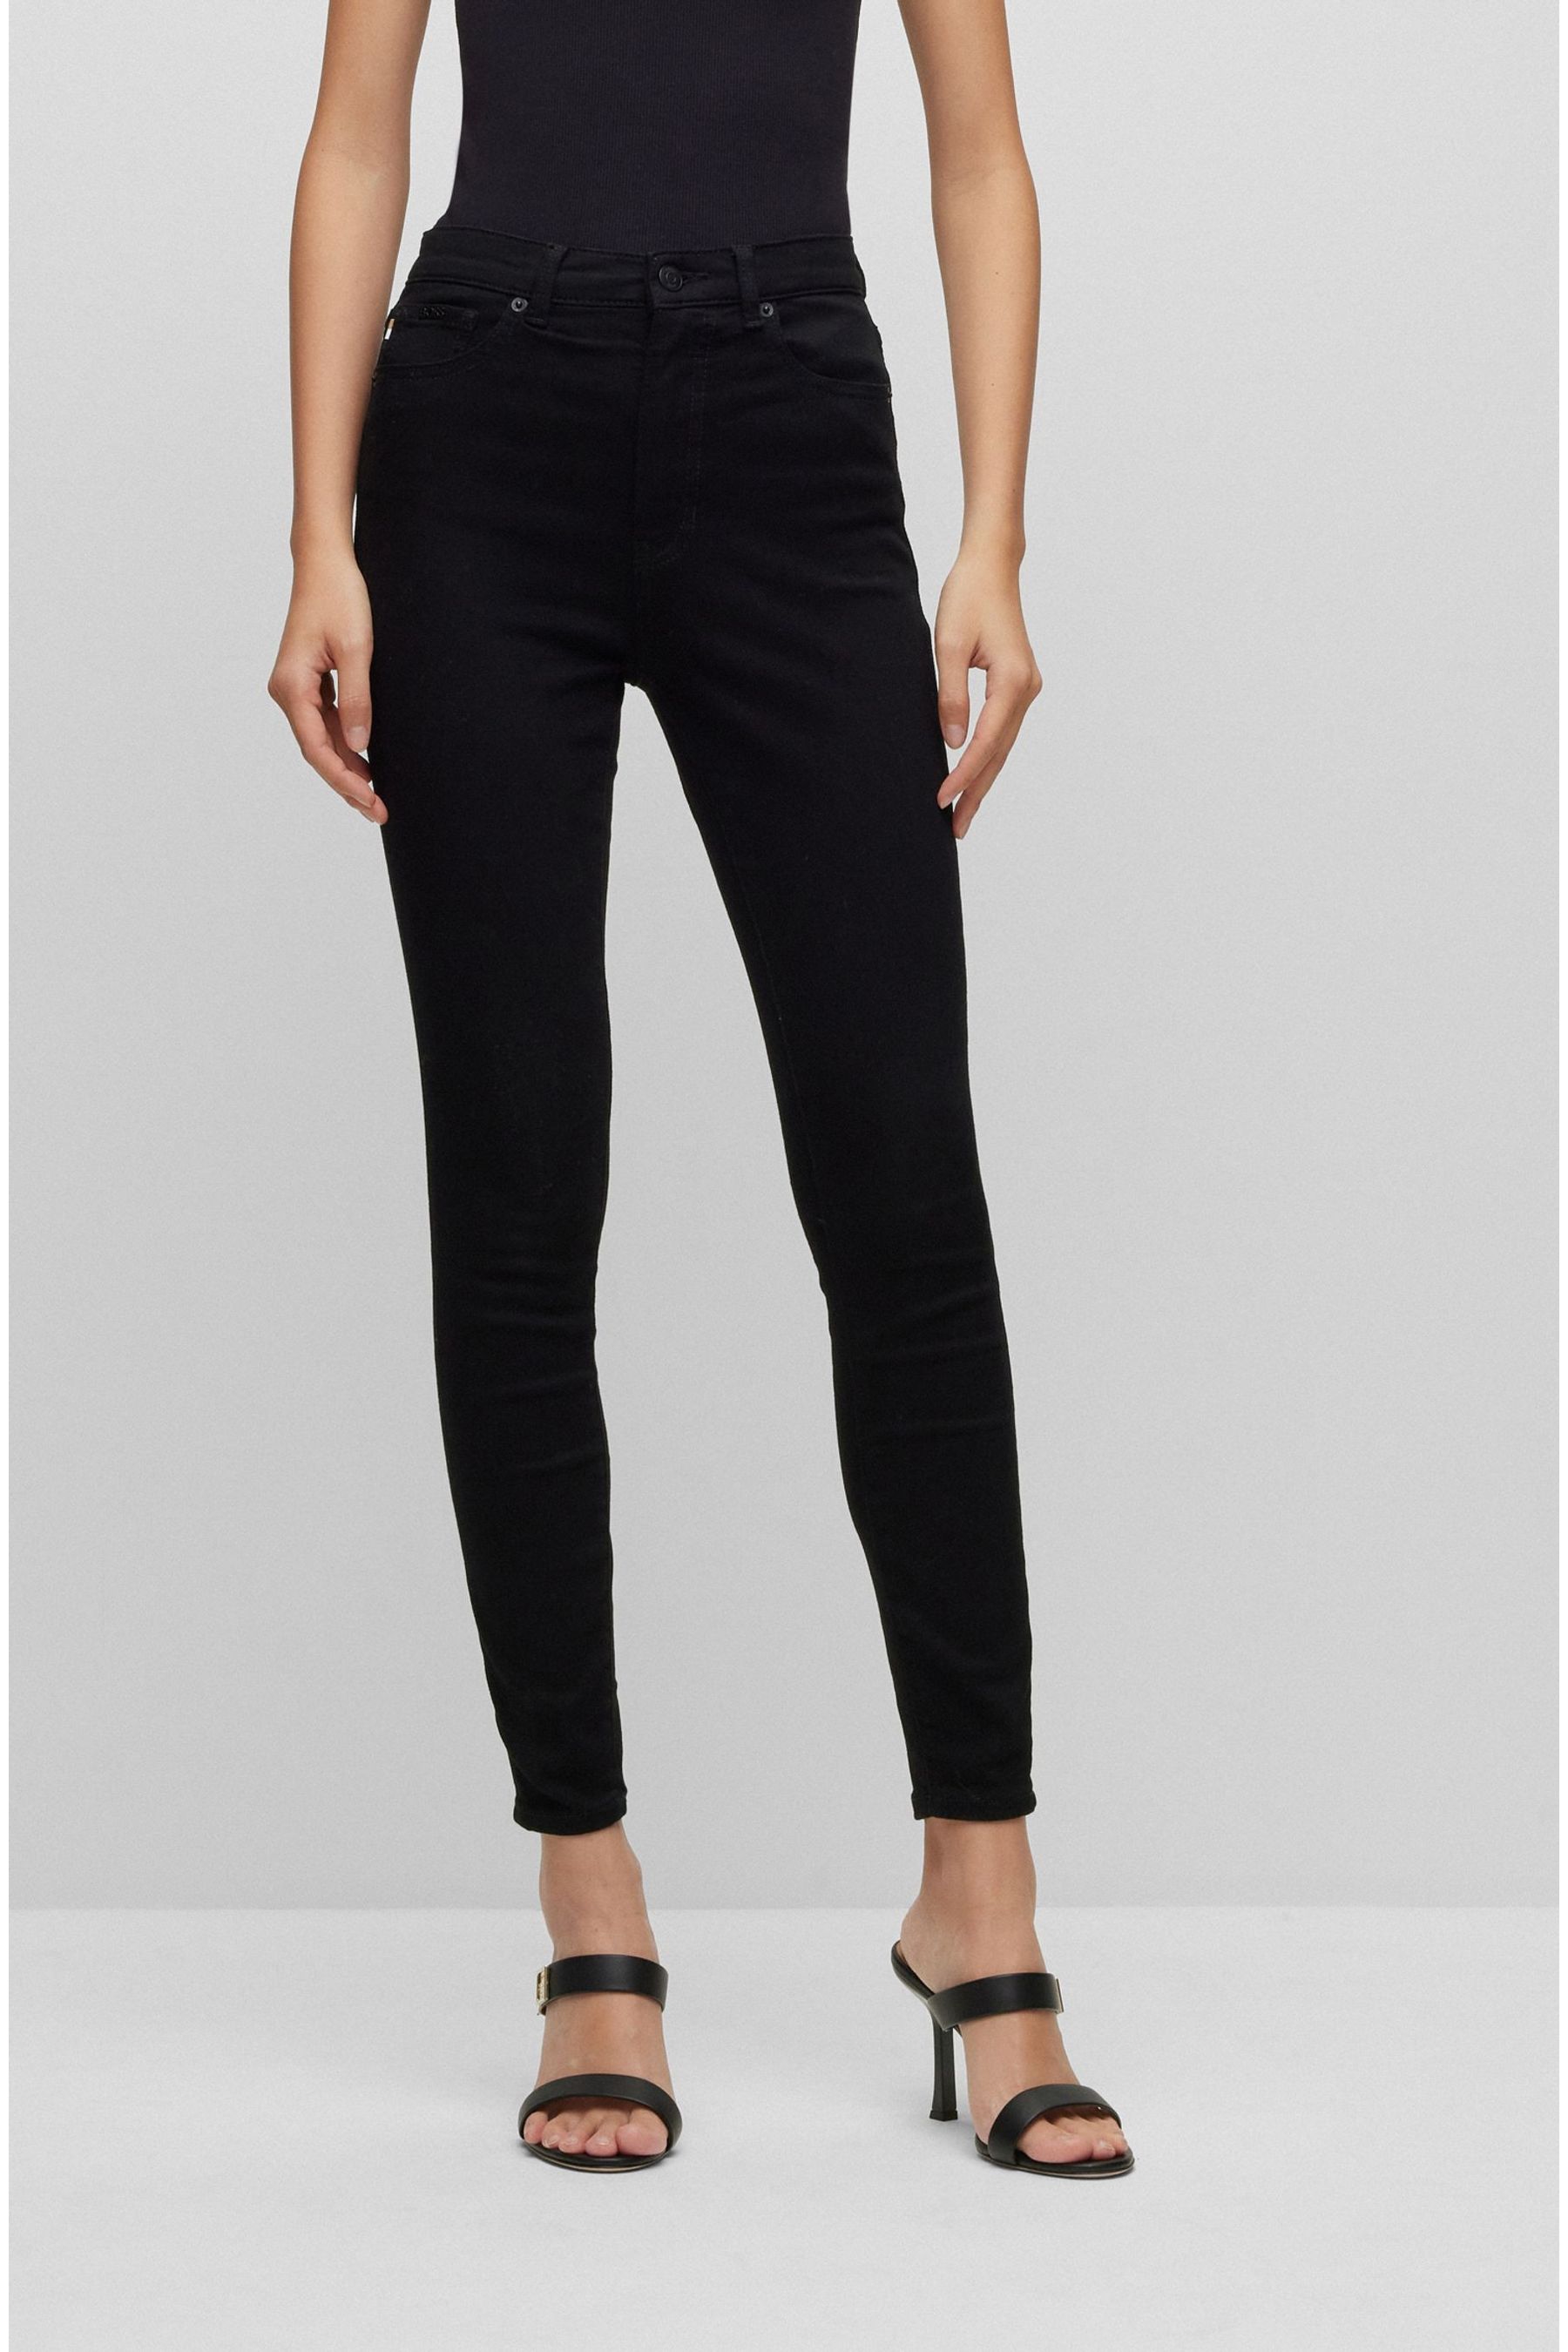 Buy BOSS Black Maye Slim Stretch Jeans from the Next UK online shop